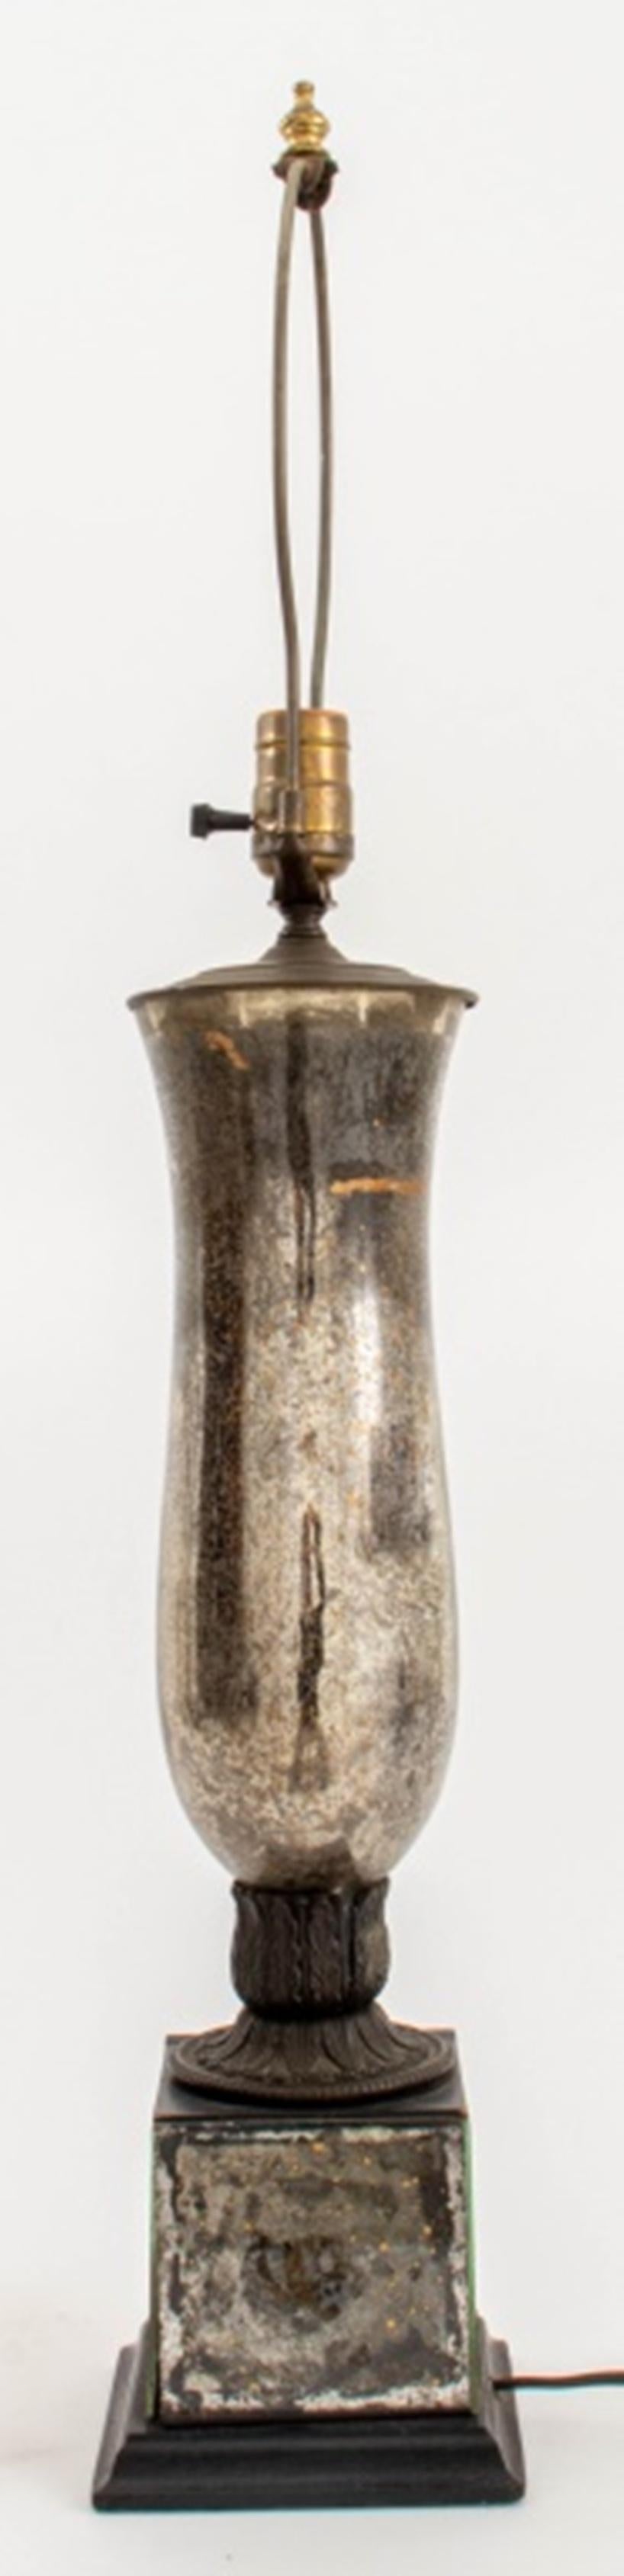 Mercury Mirror Baluster Vase Lamps, 2, 1940s For Sale 1